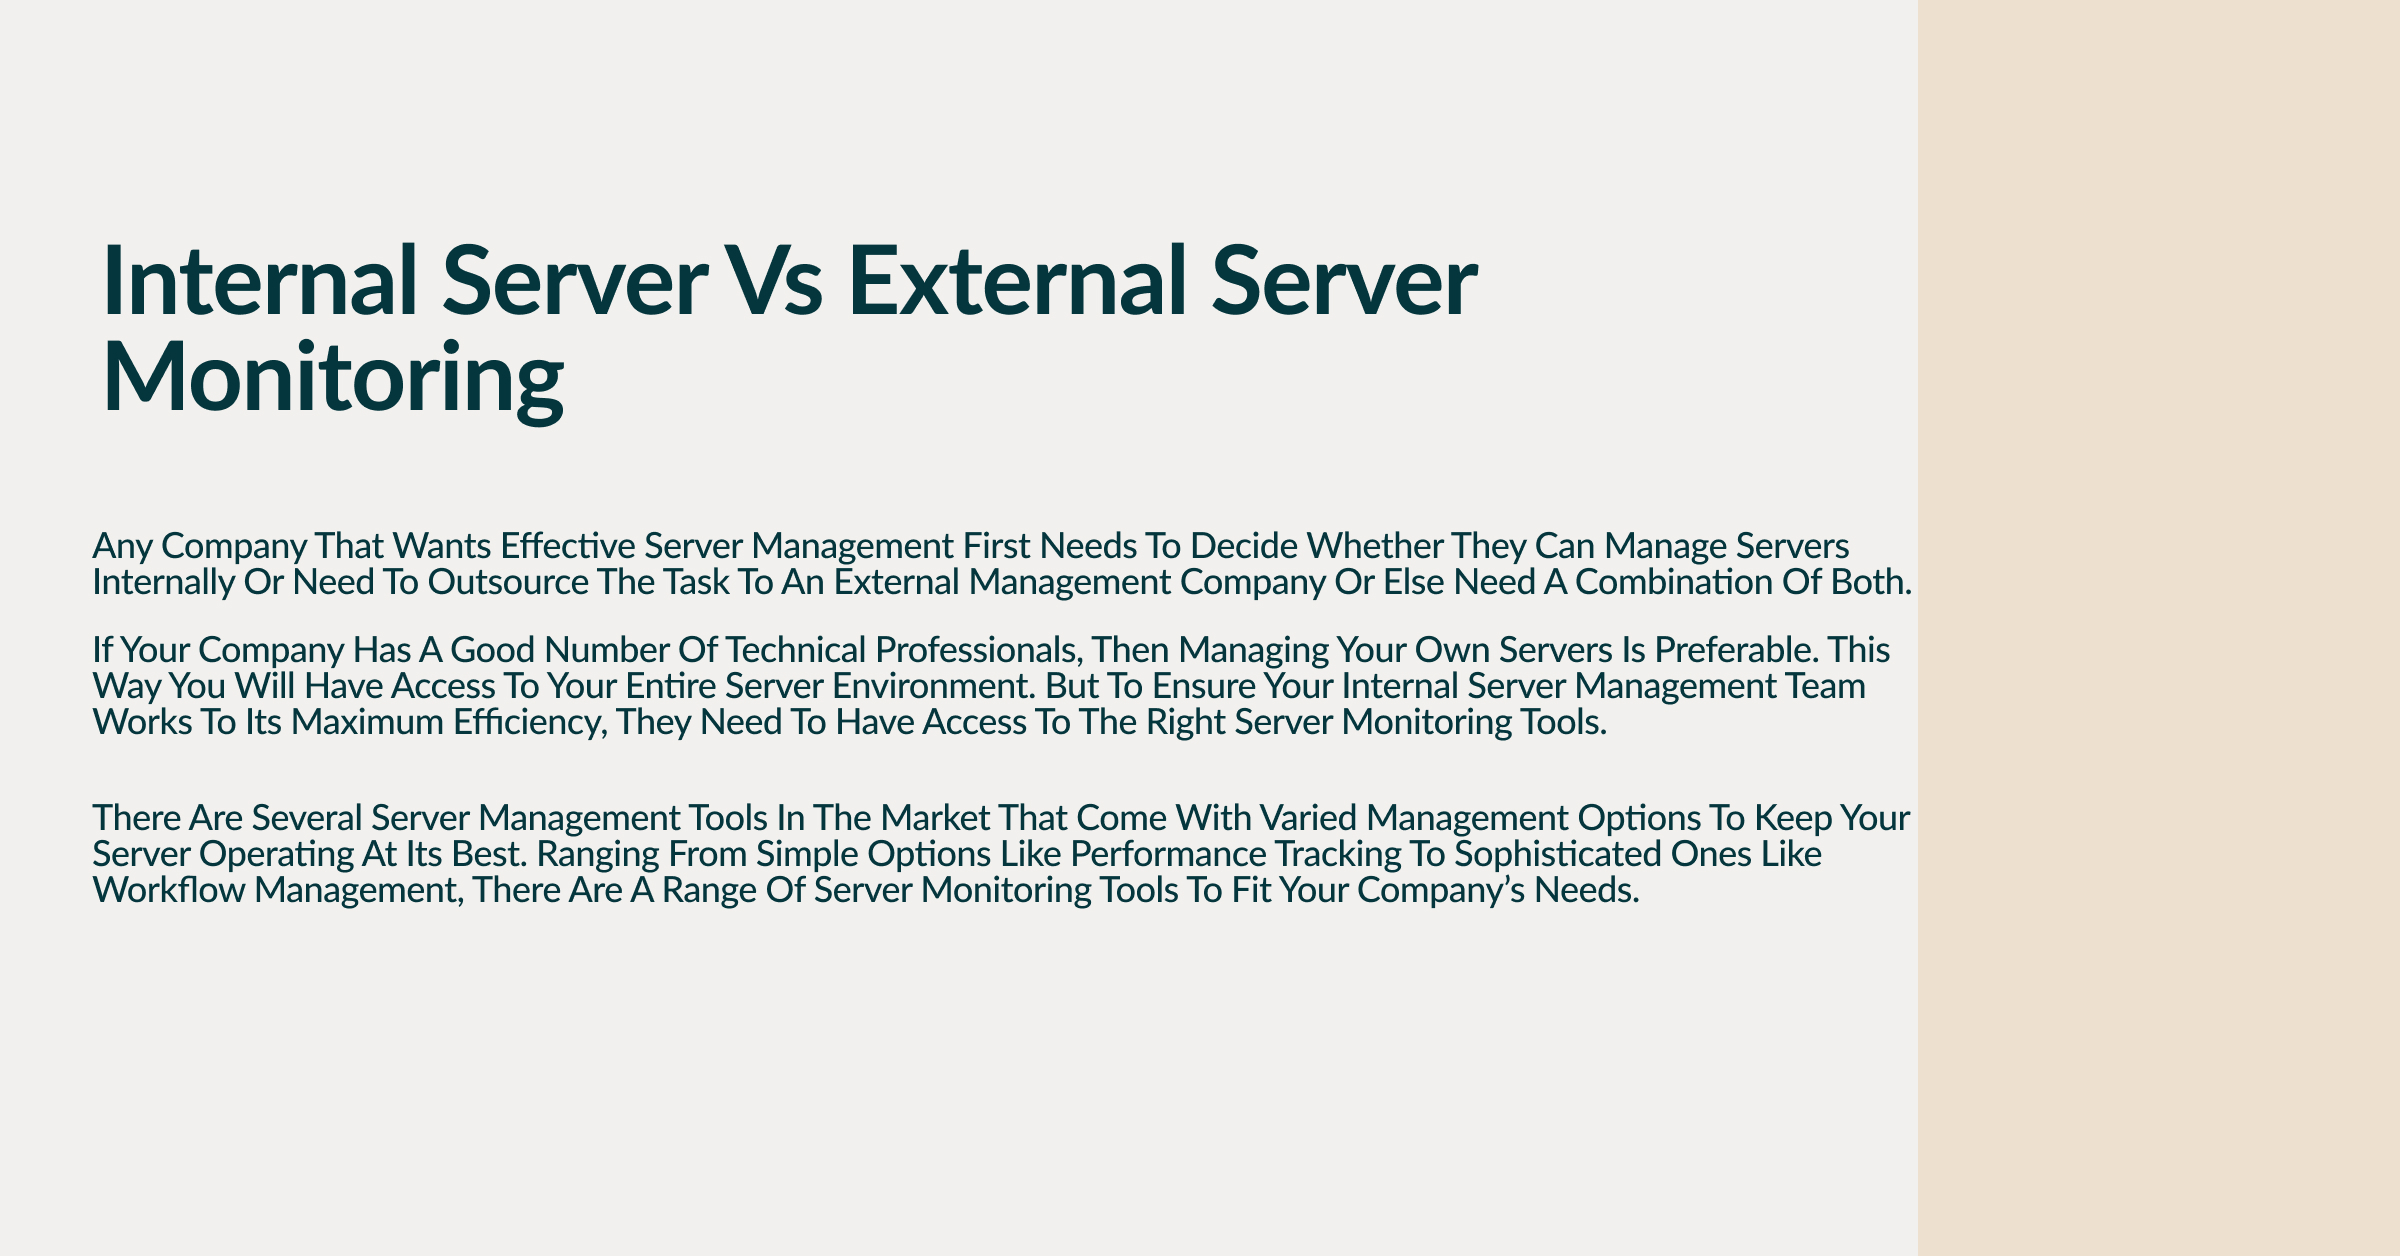 Internal Server vs External Server Monitoring